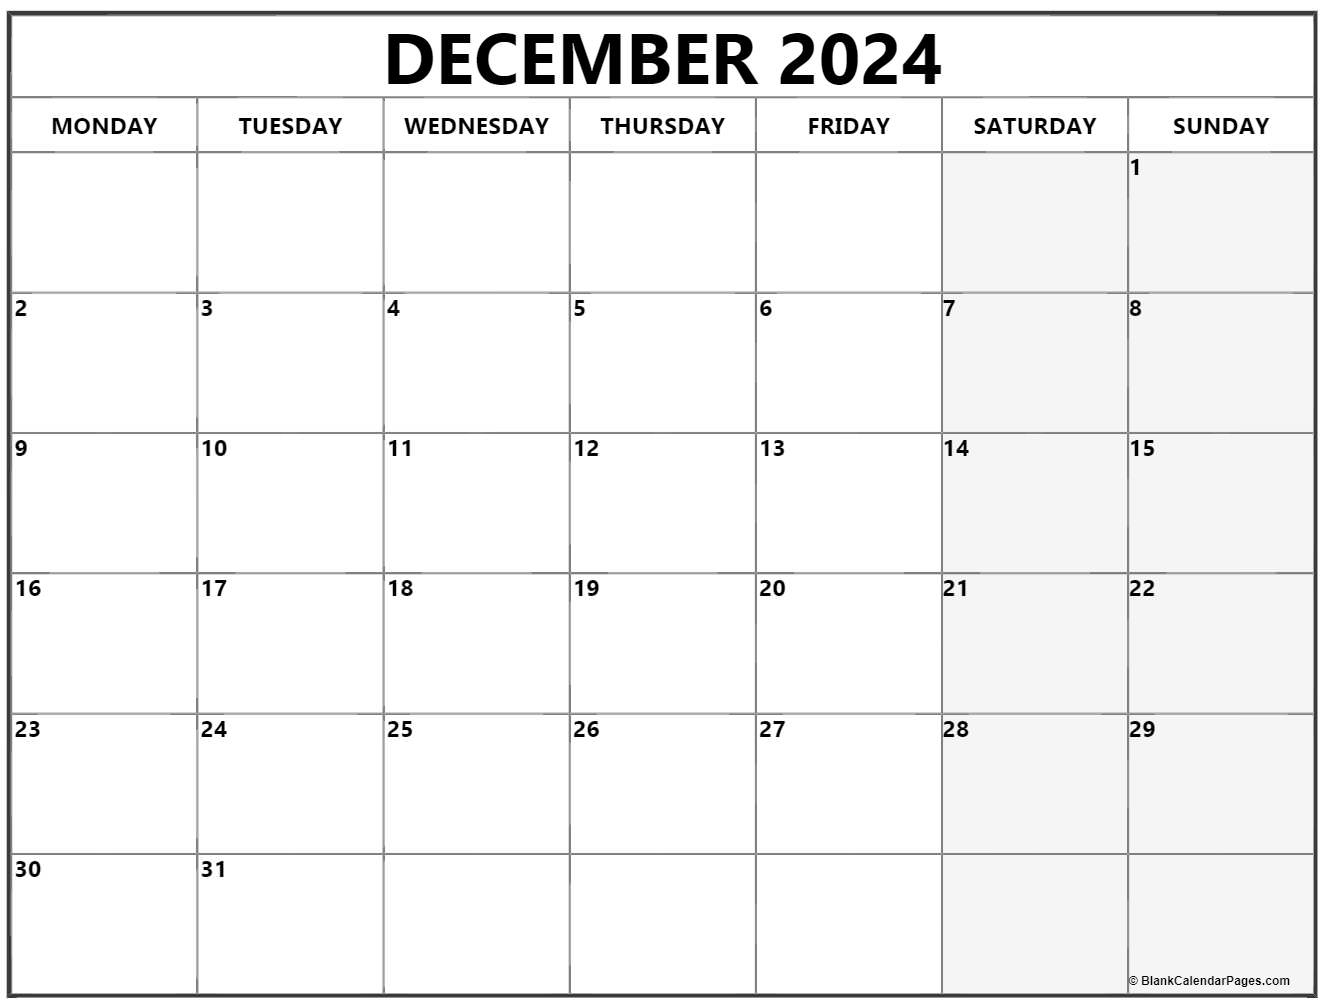 December 2024 Monday calendar. Monday to Sunday